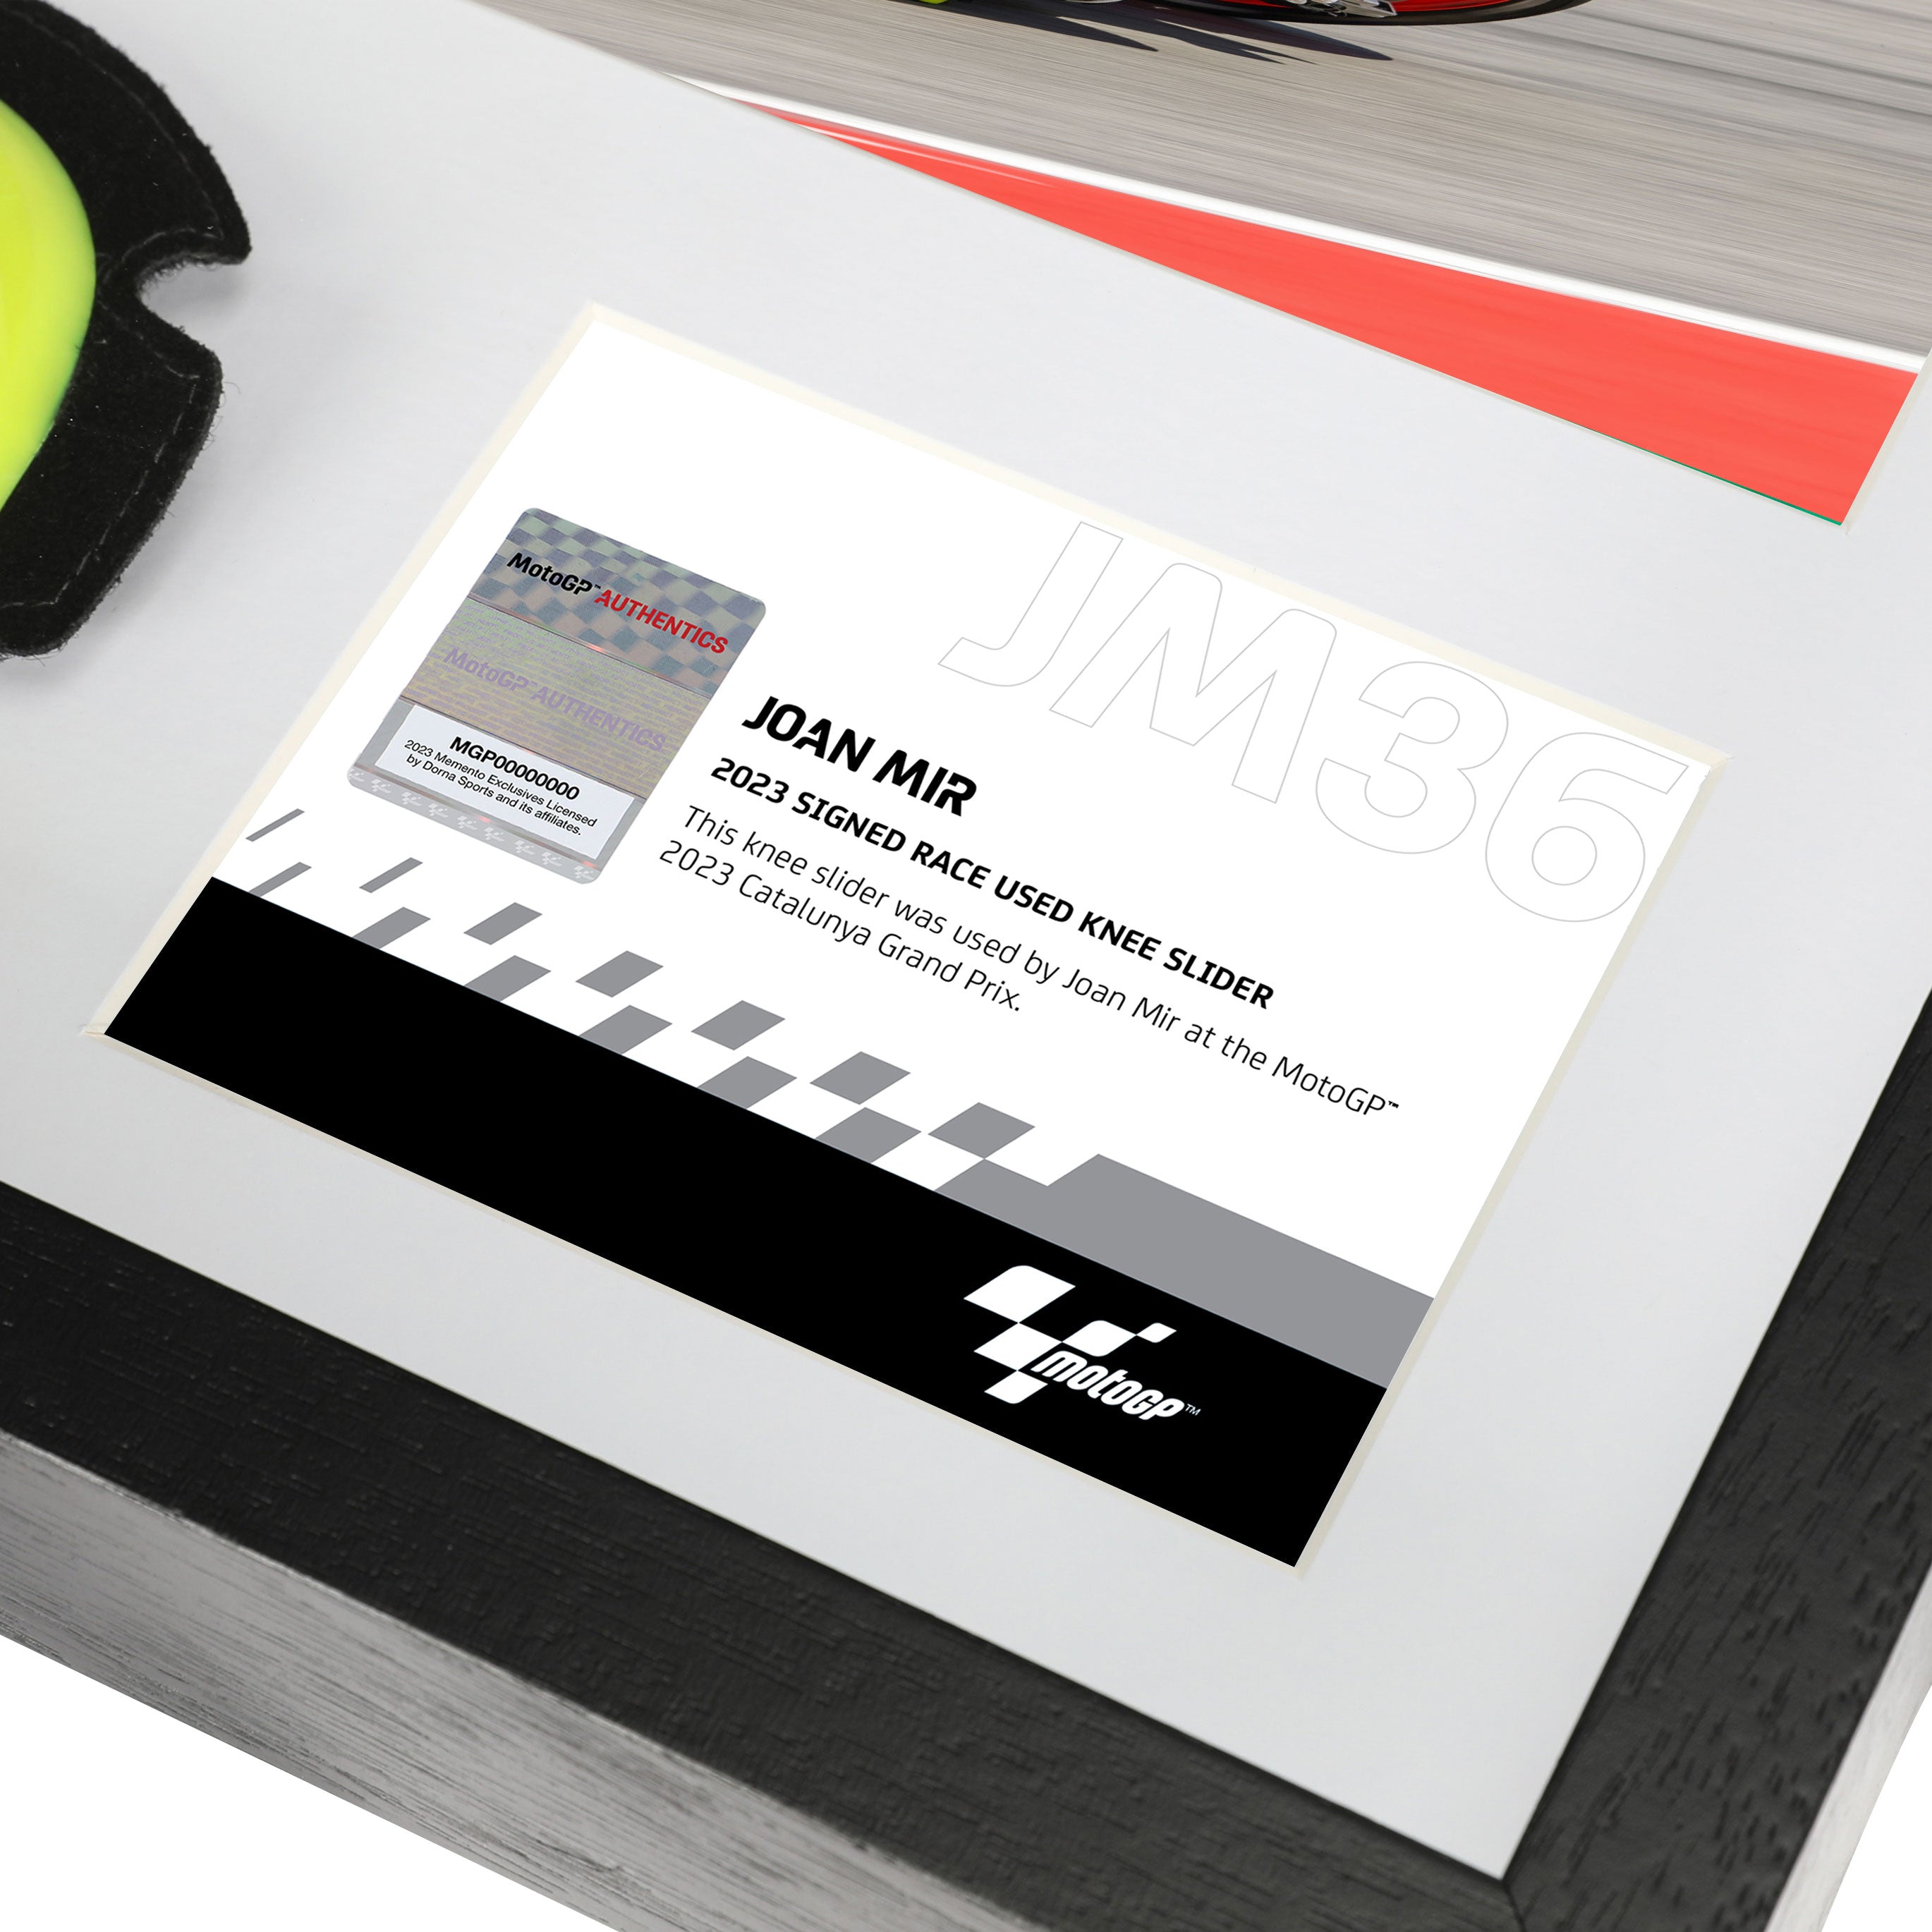 Joan Mir Signed Race-used Knee Slider – Catalunya GP 2023